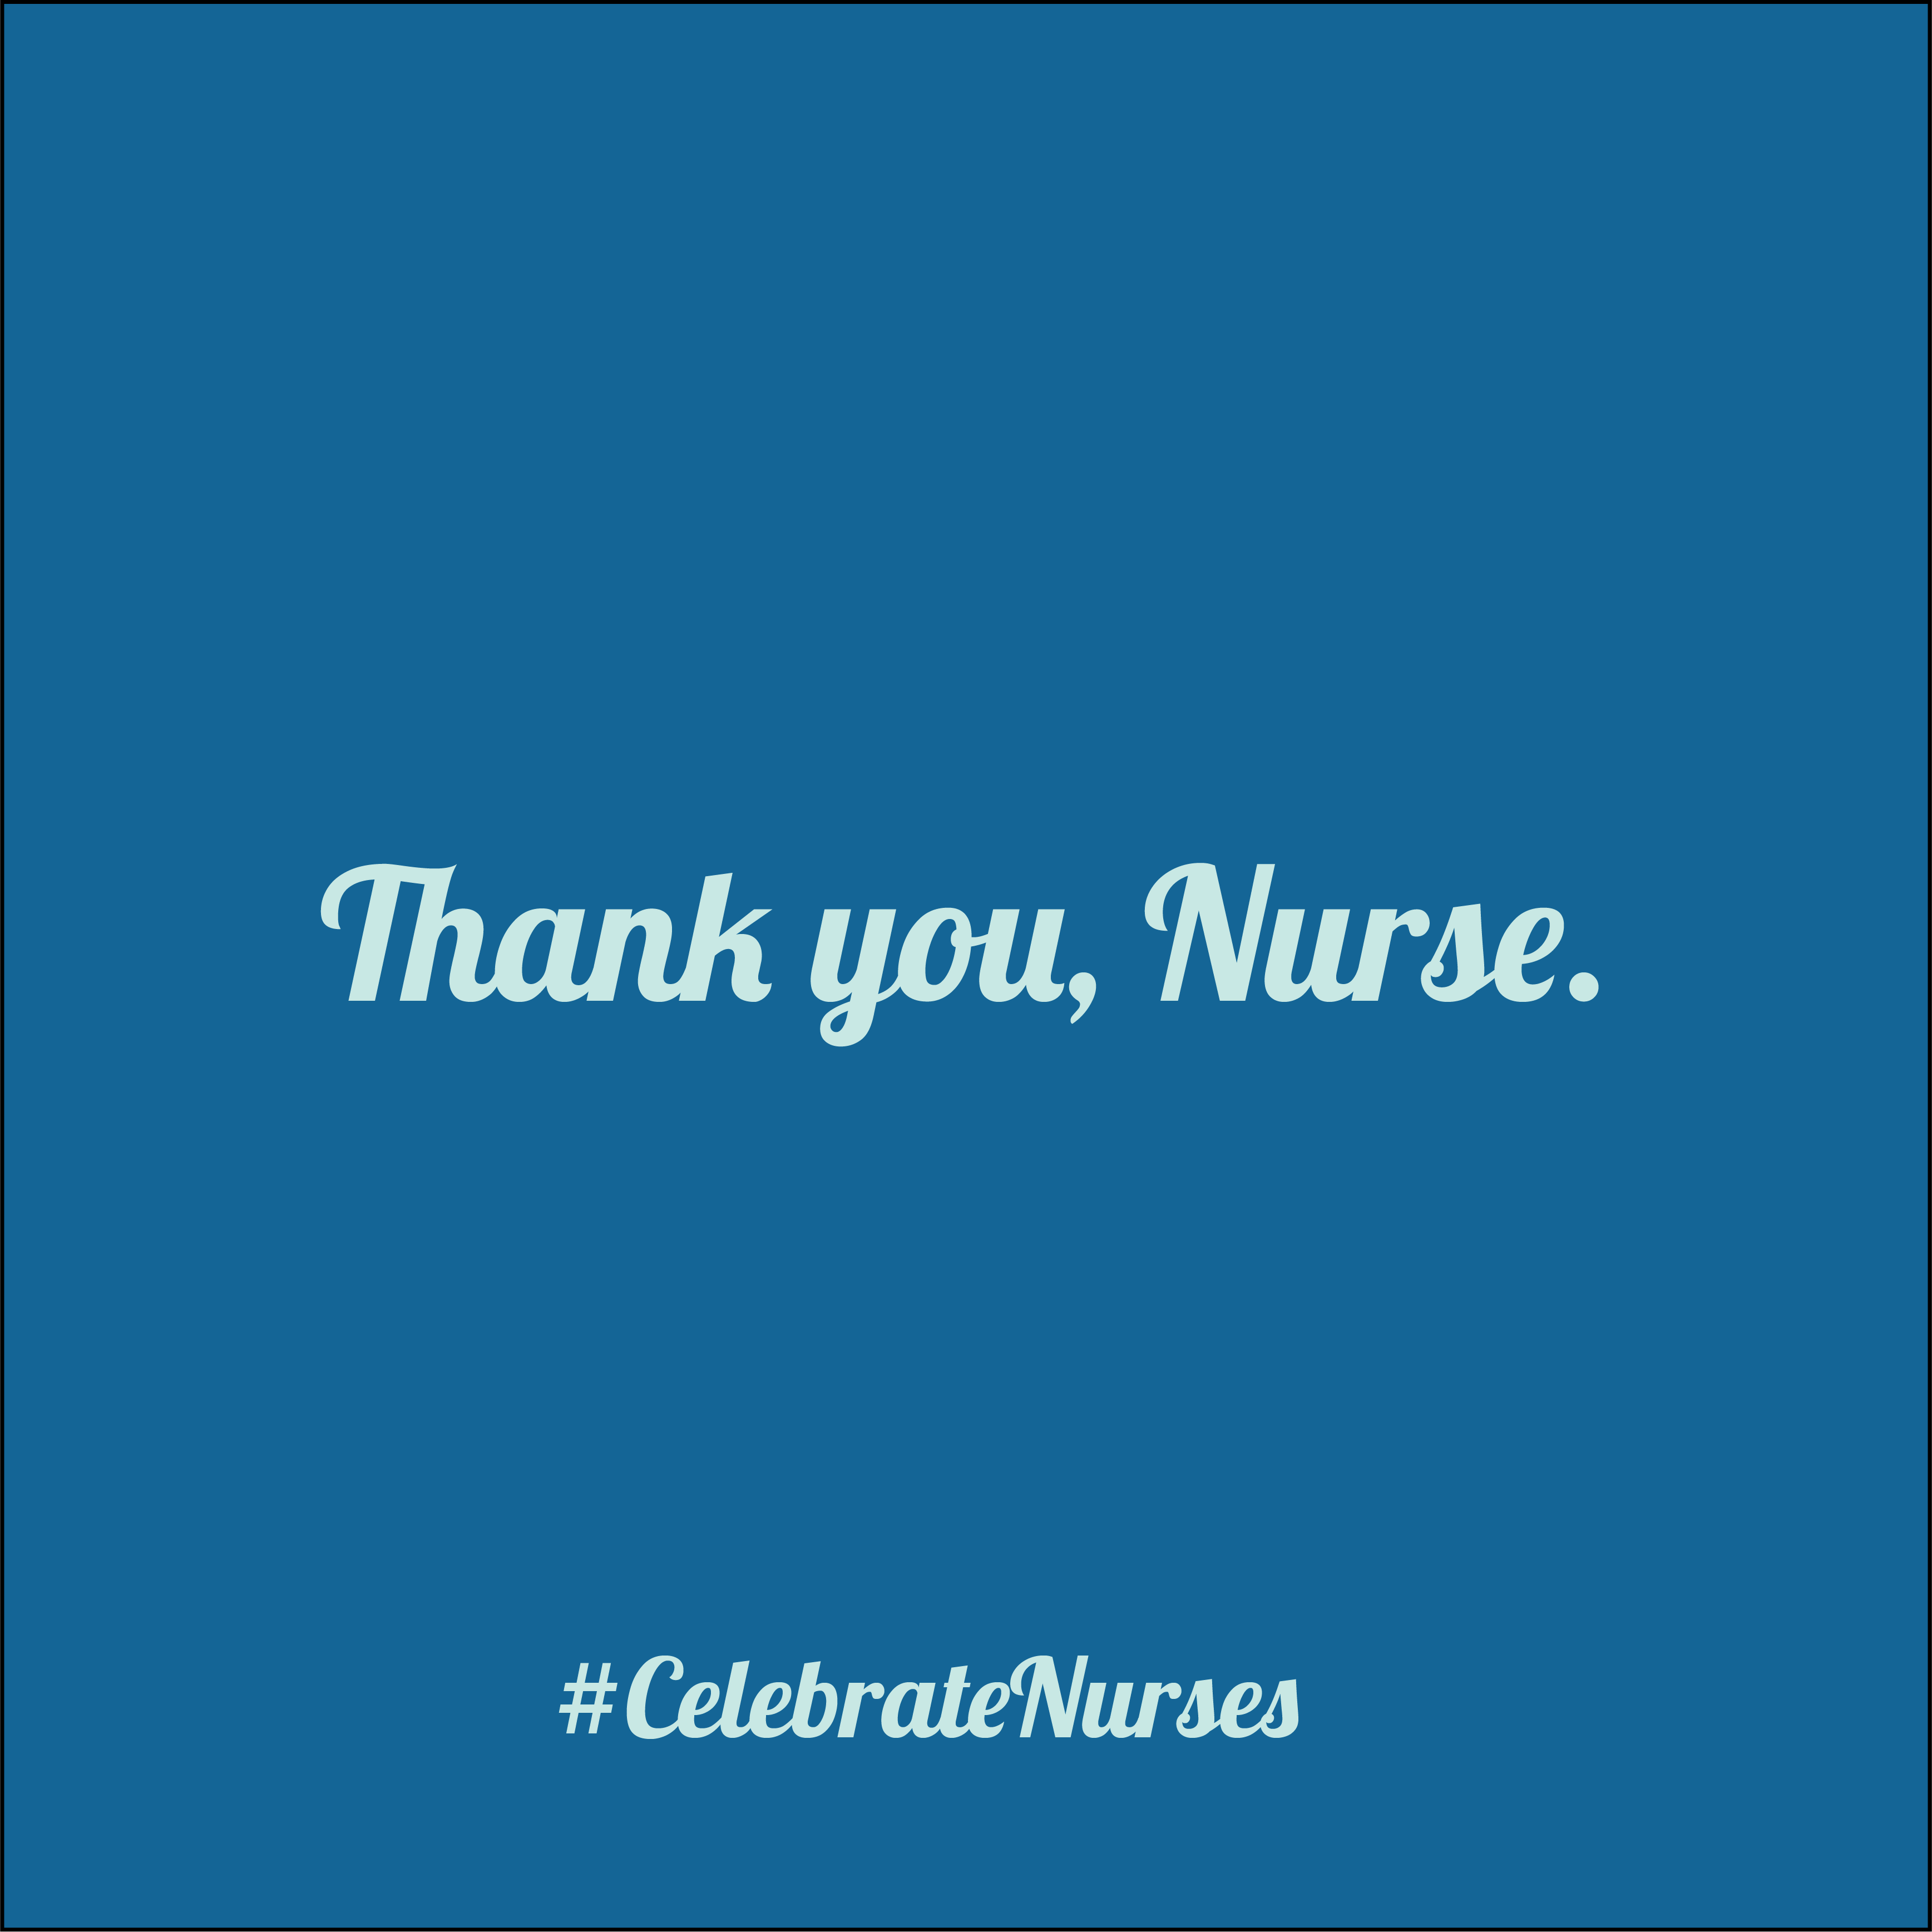 #CelebrateNurses Thank you, Nurse.